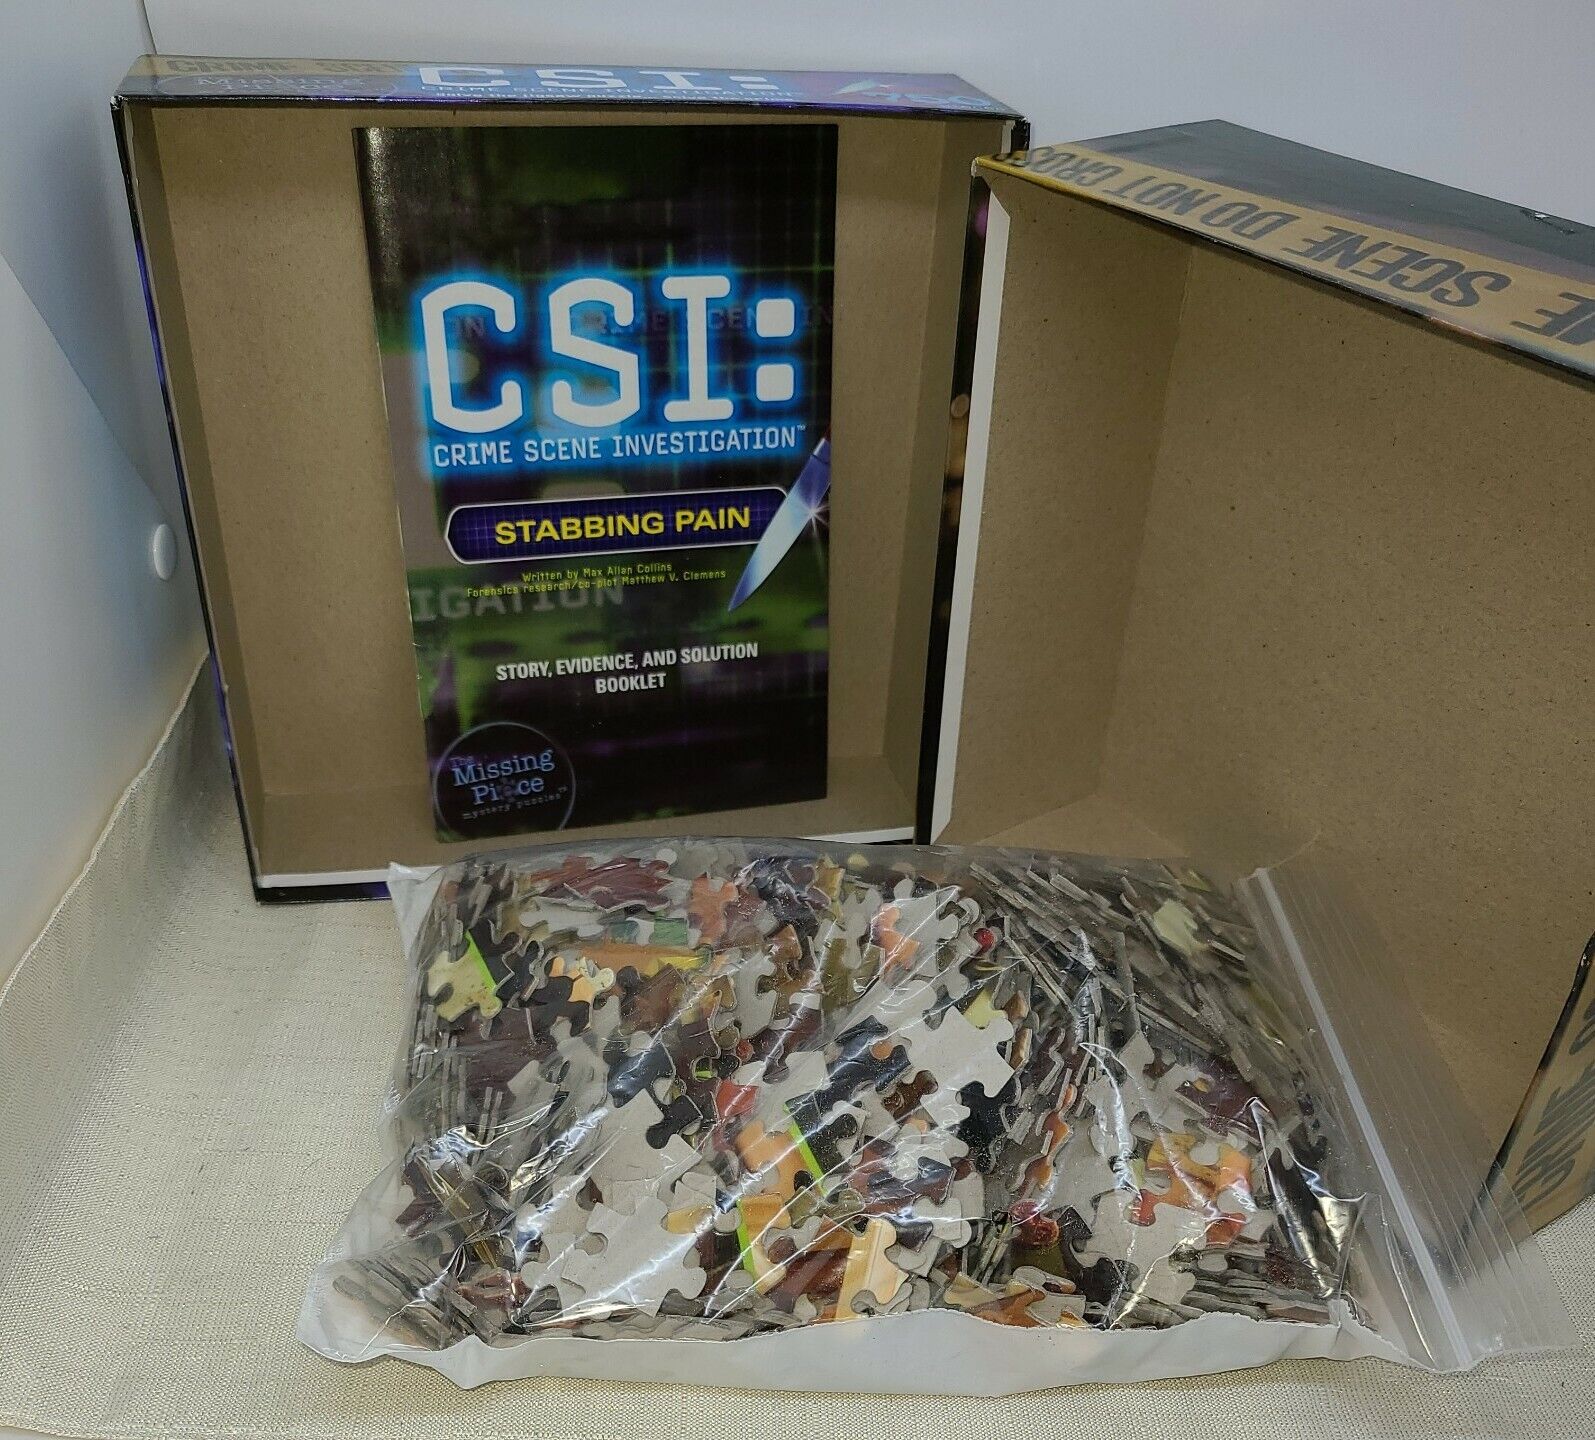 CSI Crime Scene Investigation Unbalanced Death Jigsaw Puzzle 750 Pcs for sale online